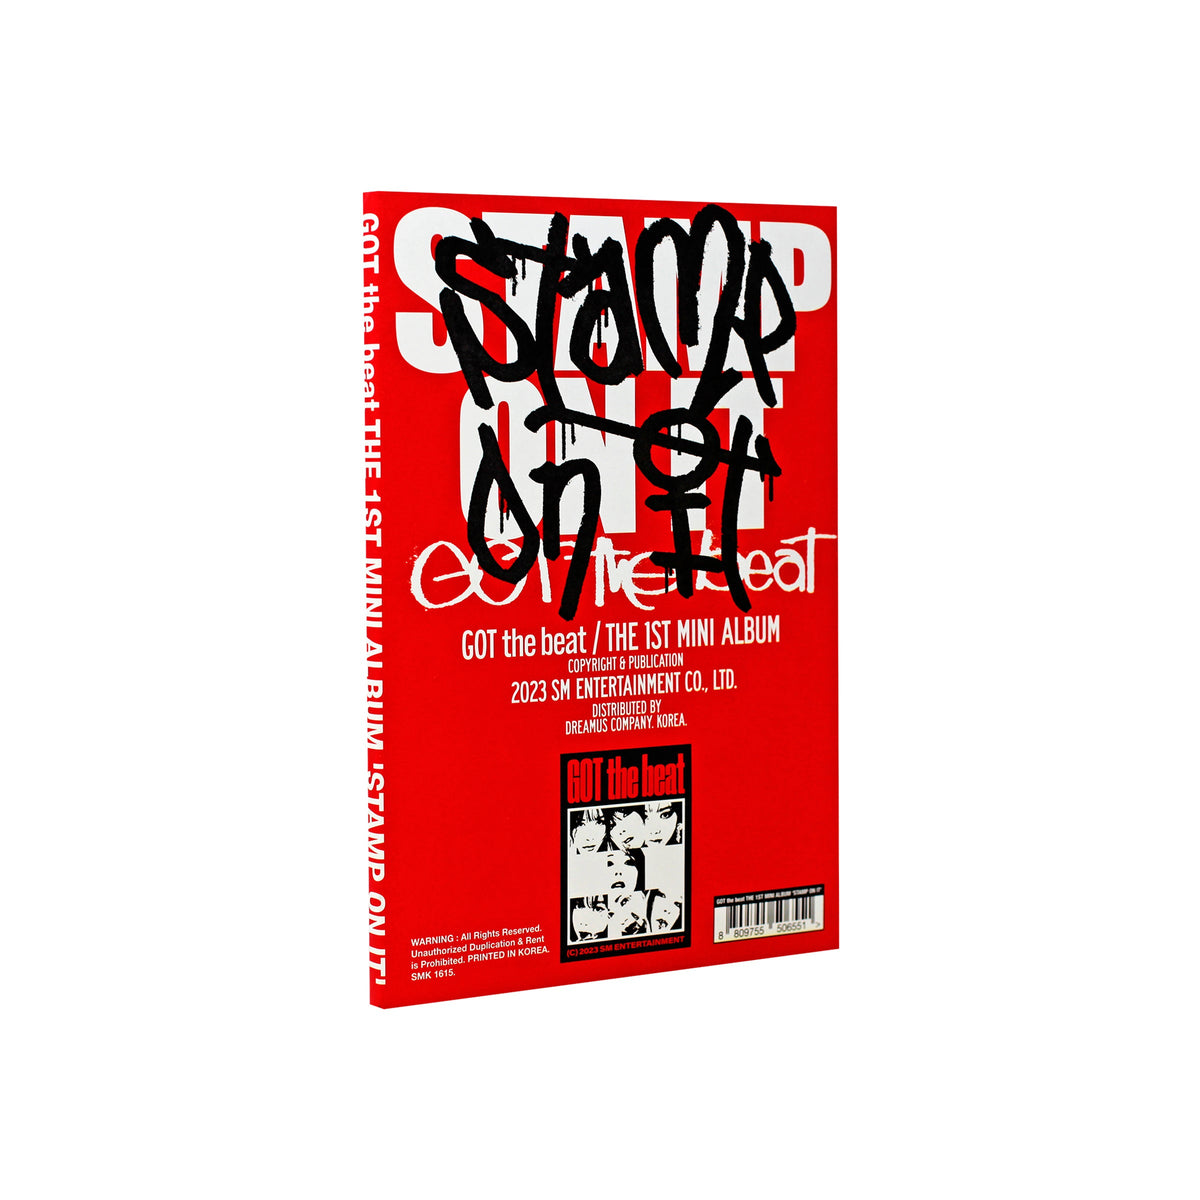 GOT the beat - Stamp On It 1st Mini Album - Stamp Ver  main image